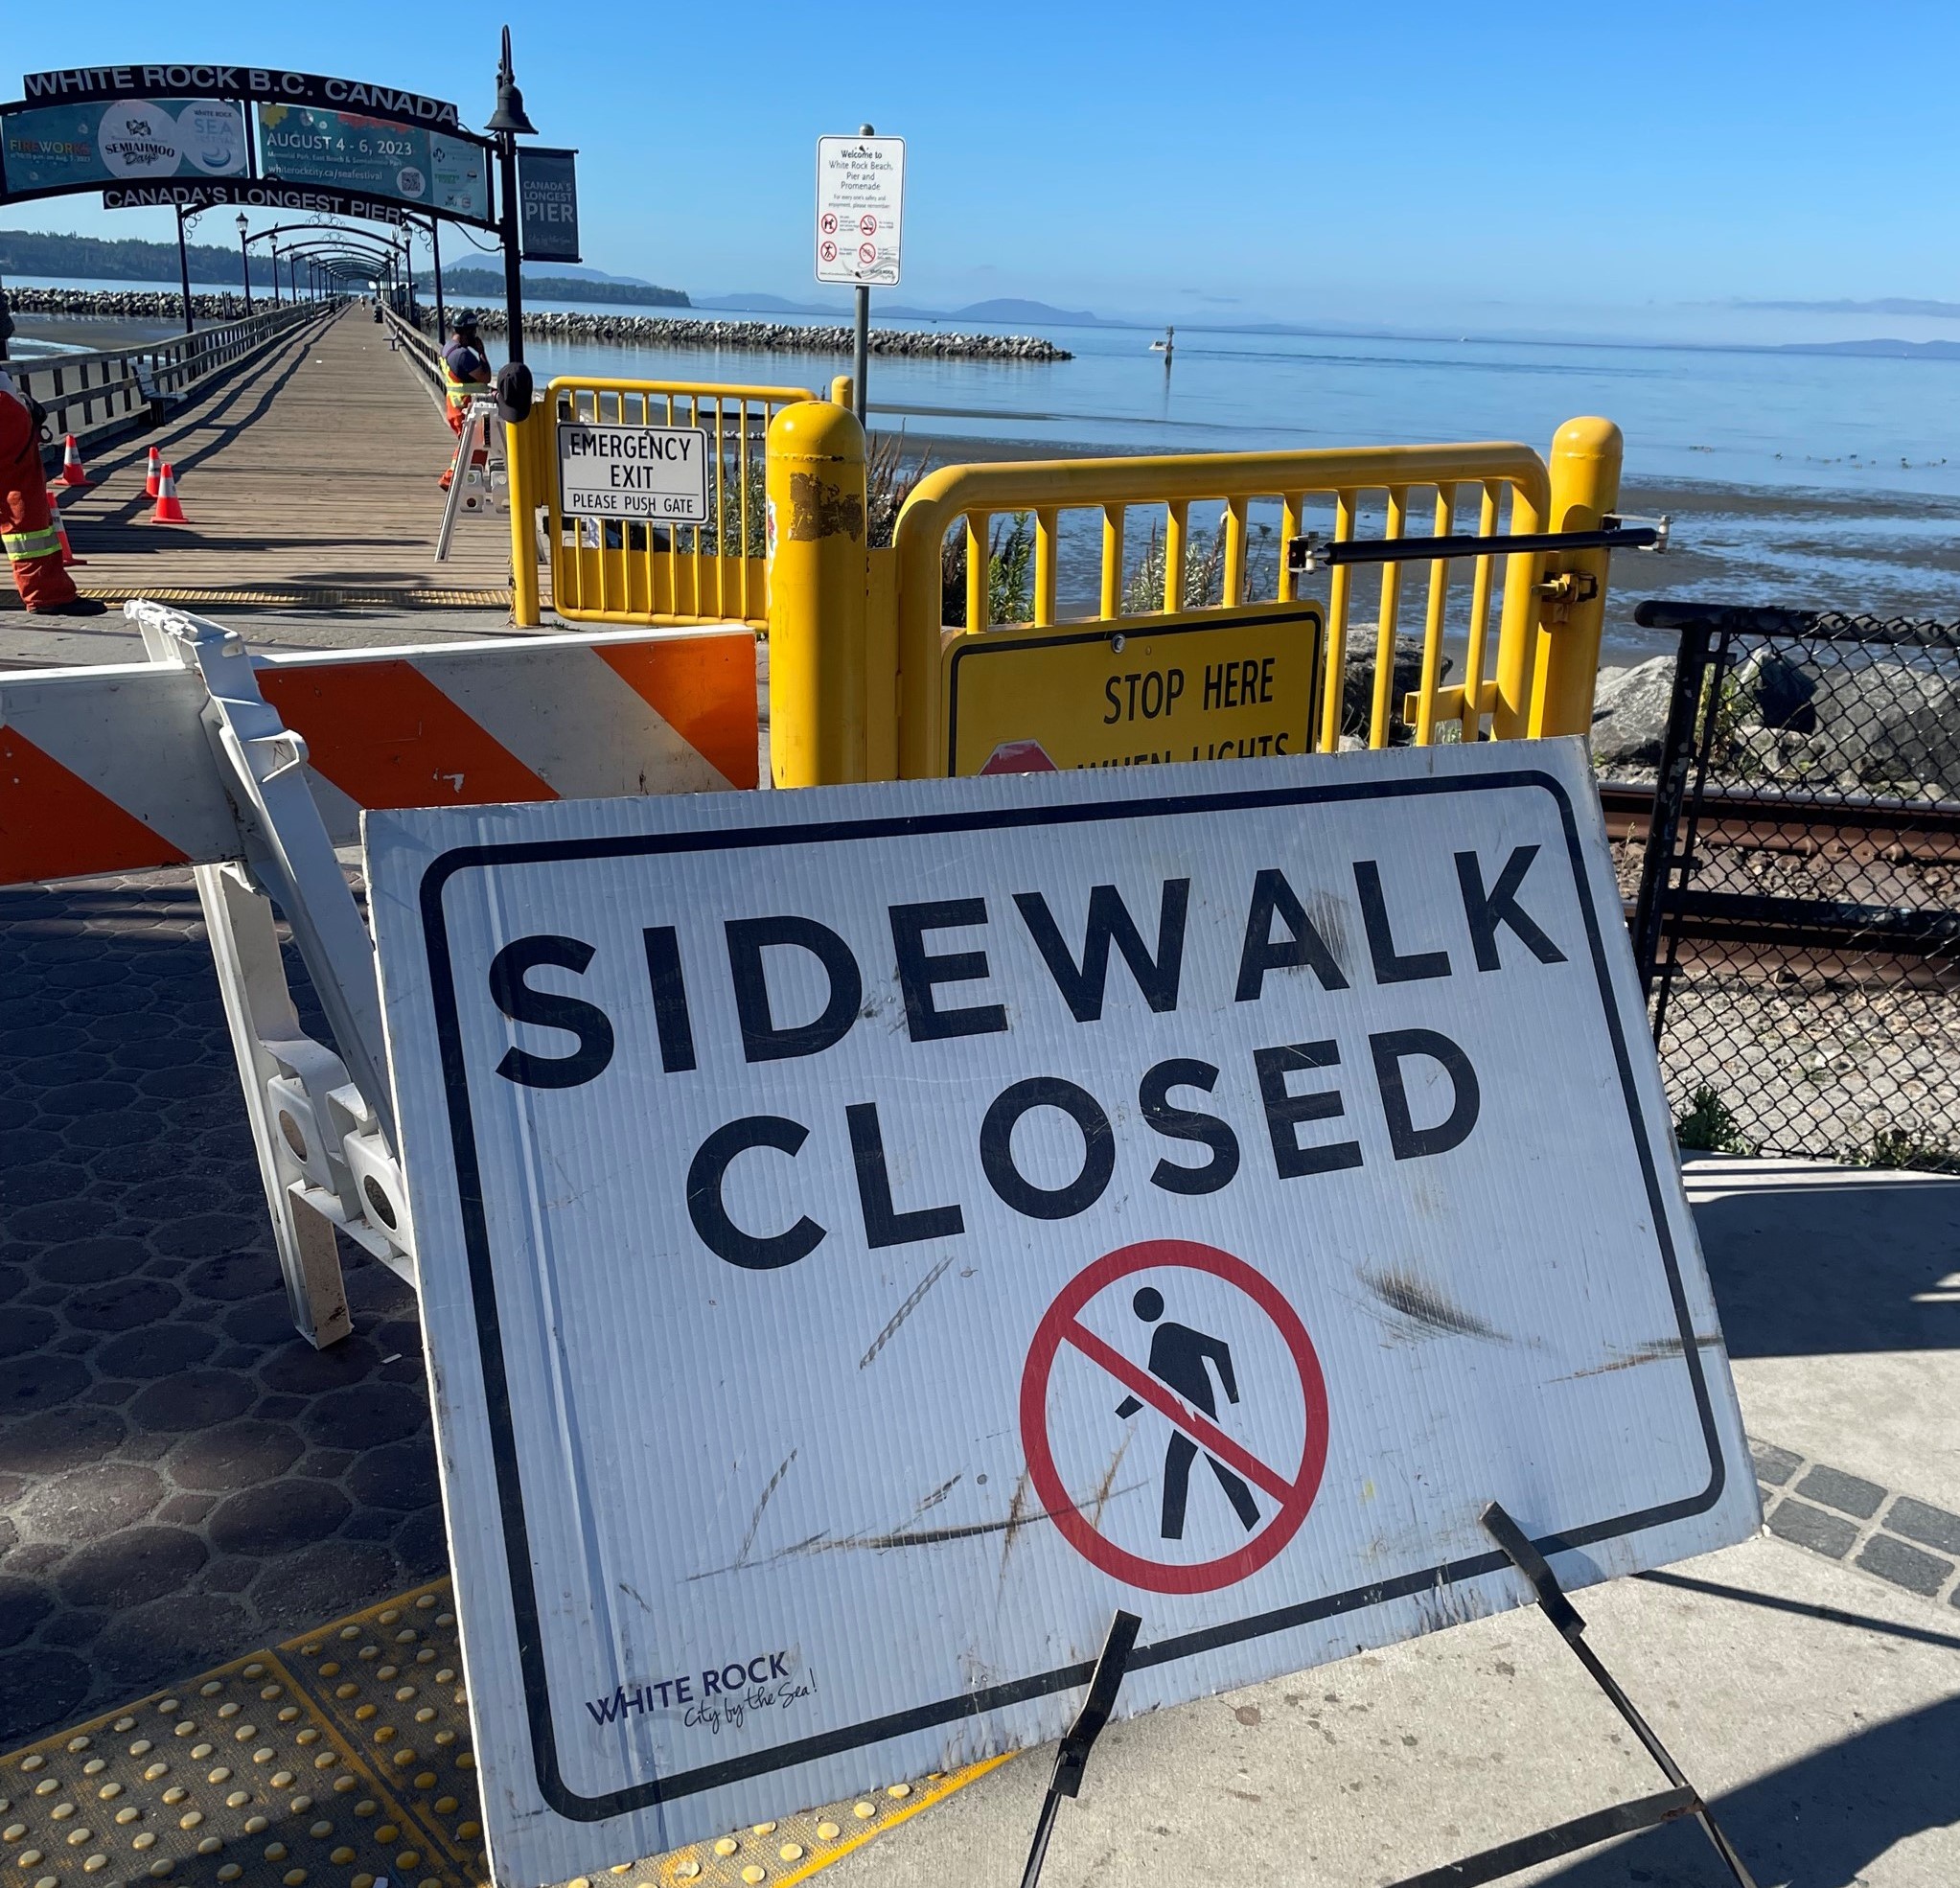 Sidewalk closed on the pier